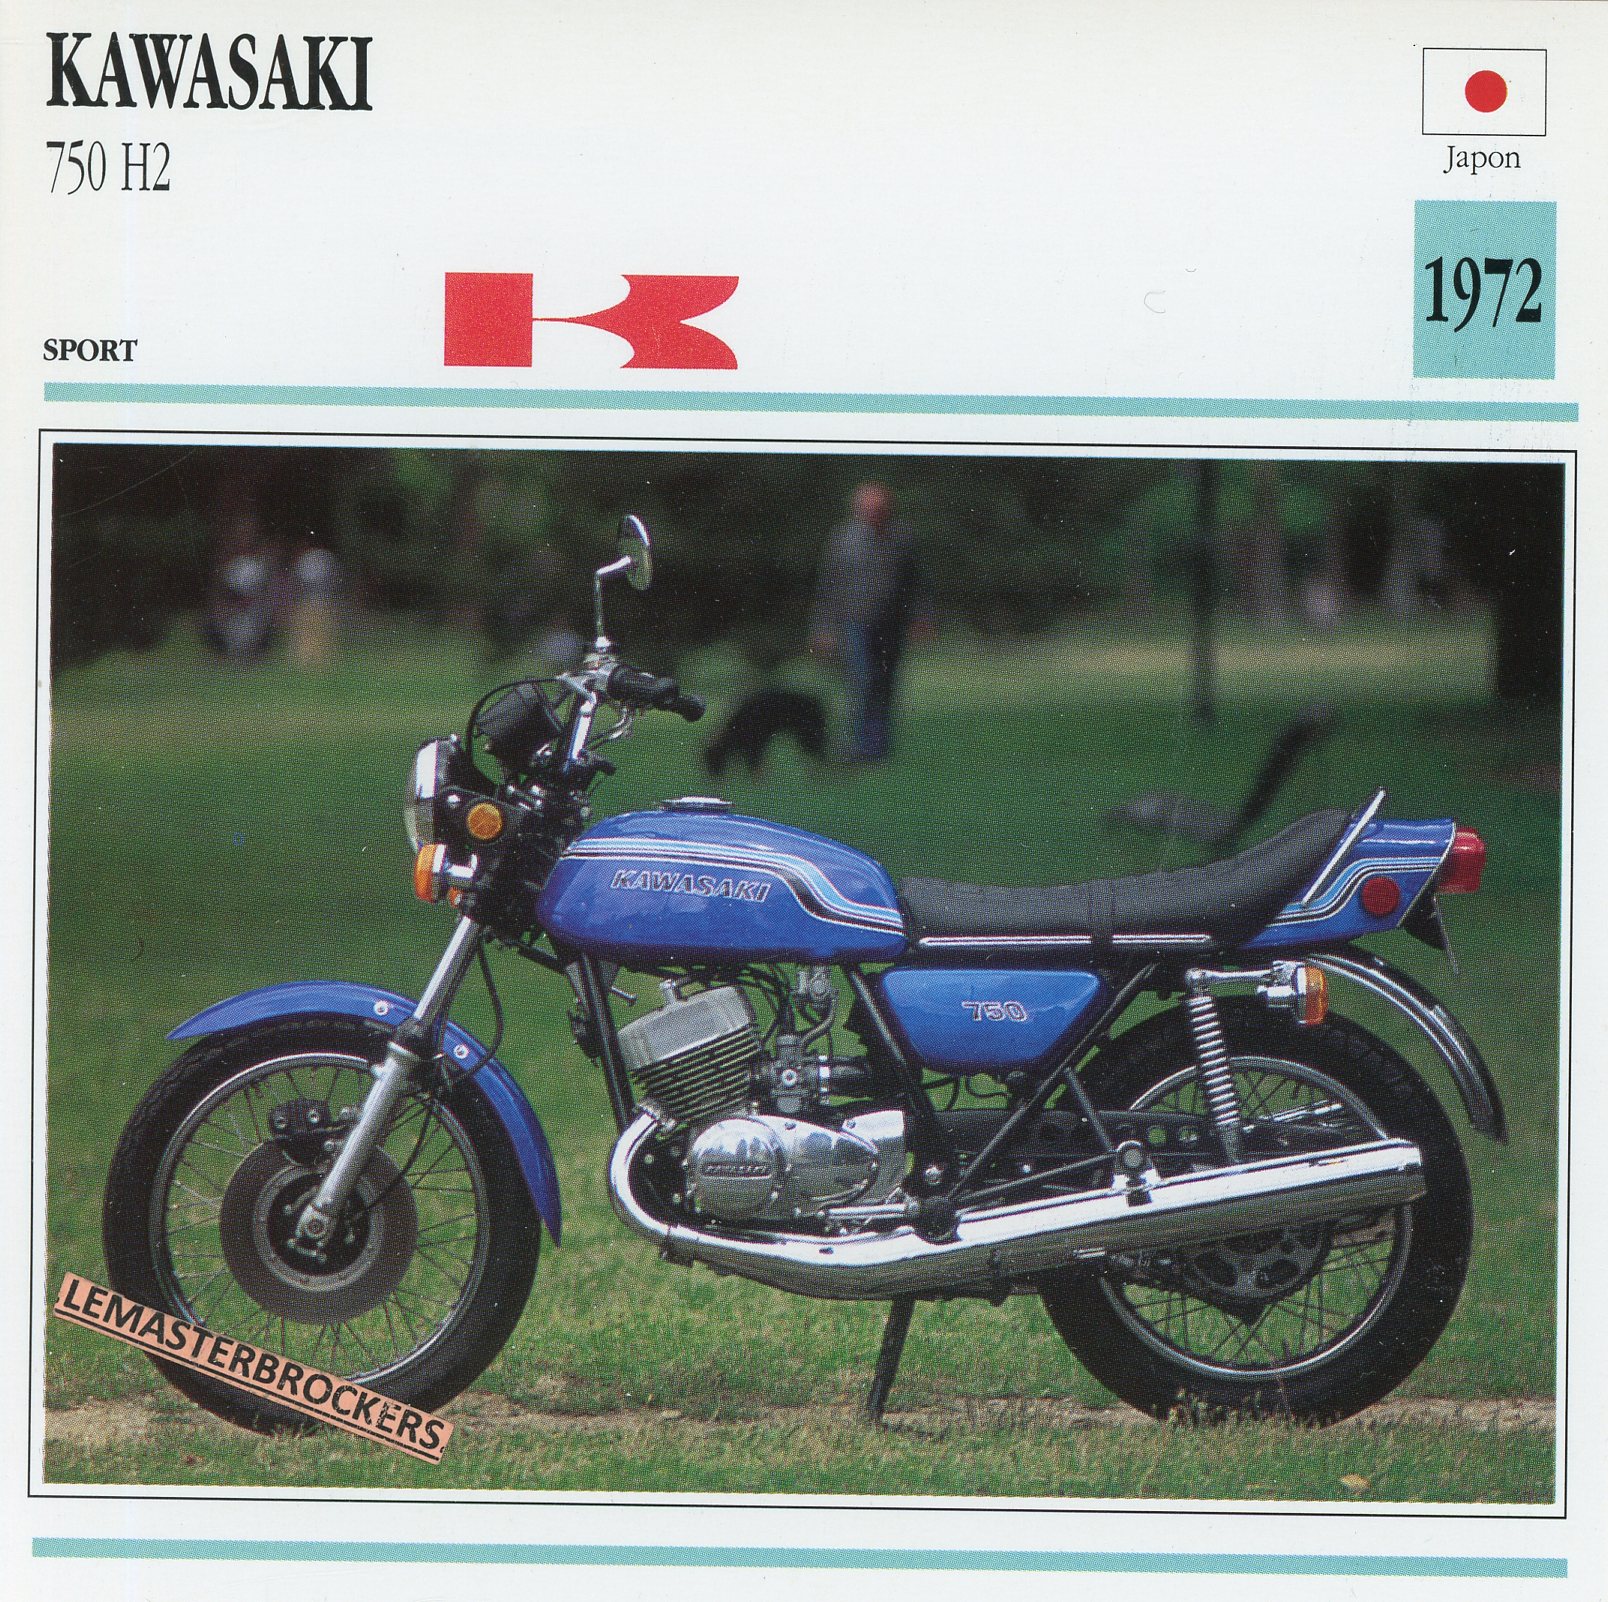 KAWASAKI-750-H2-1972-FICHE-MOTO-KAWA-LEMASTERBROCKERS